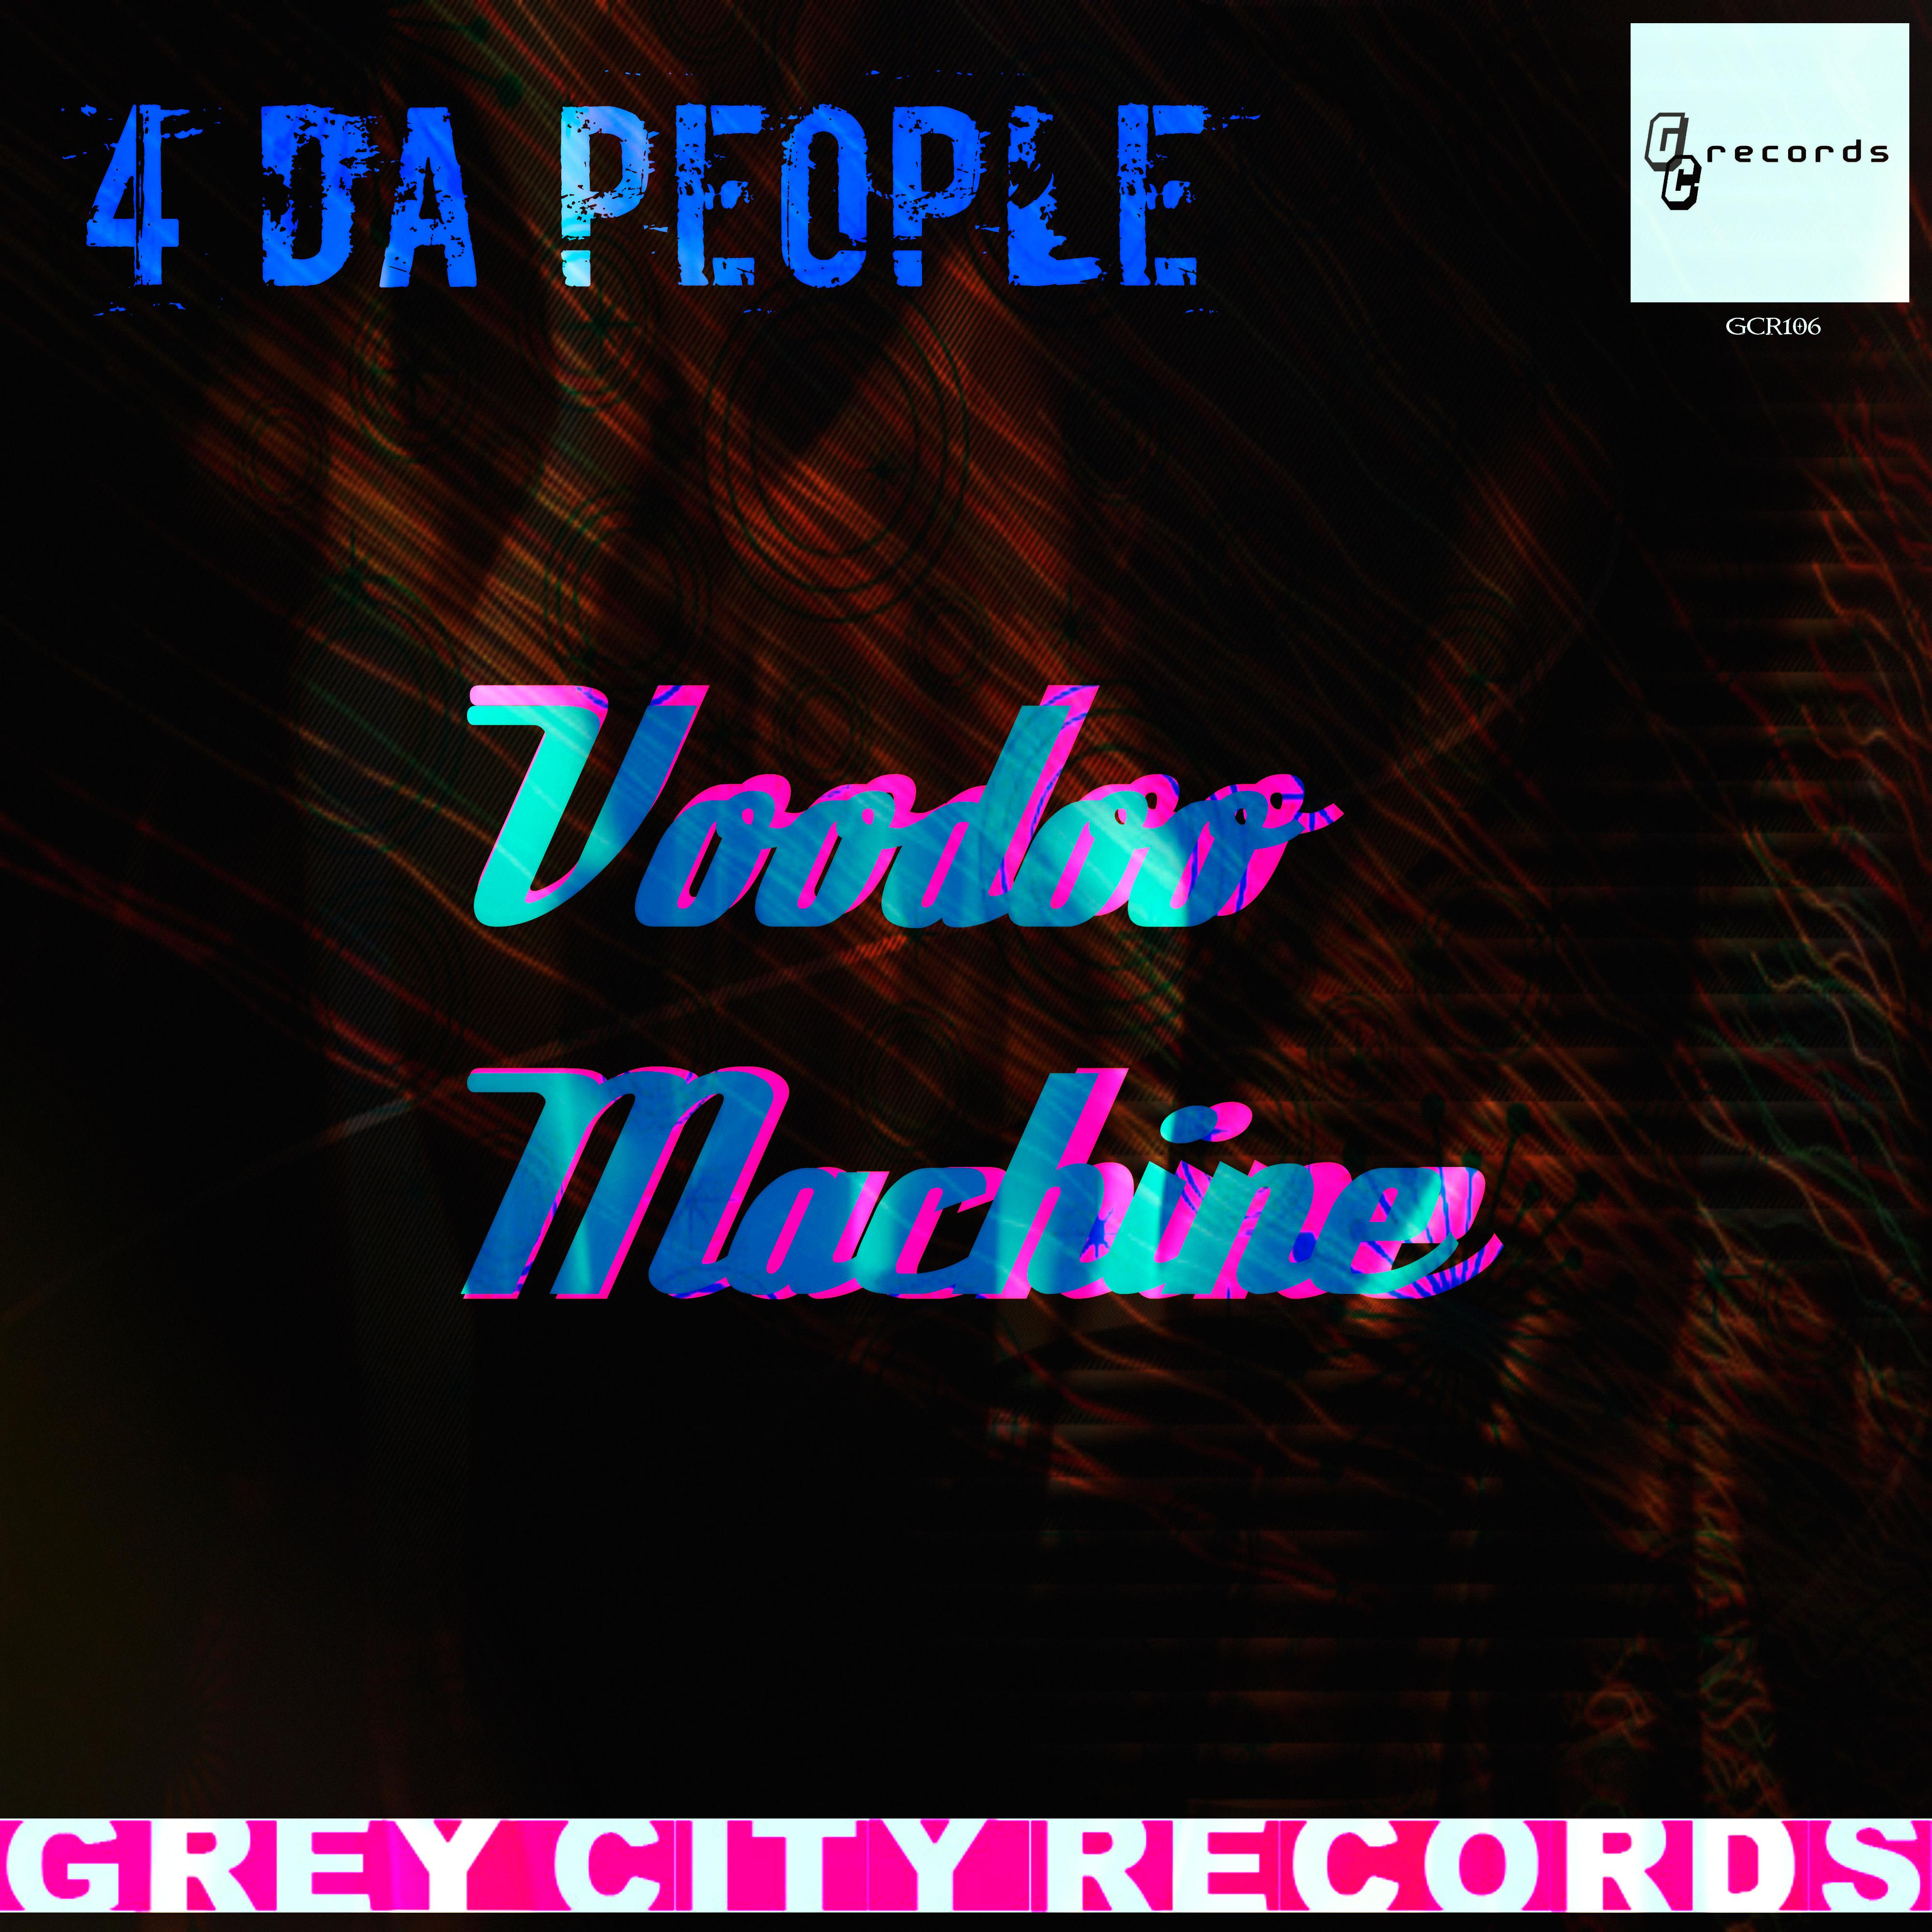 Voodoo Machine (Dub Mix)